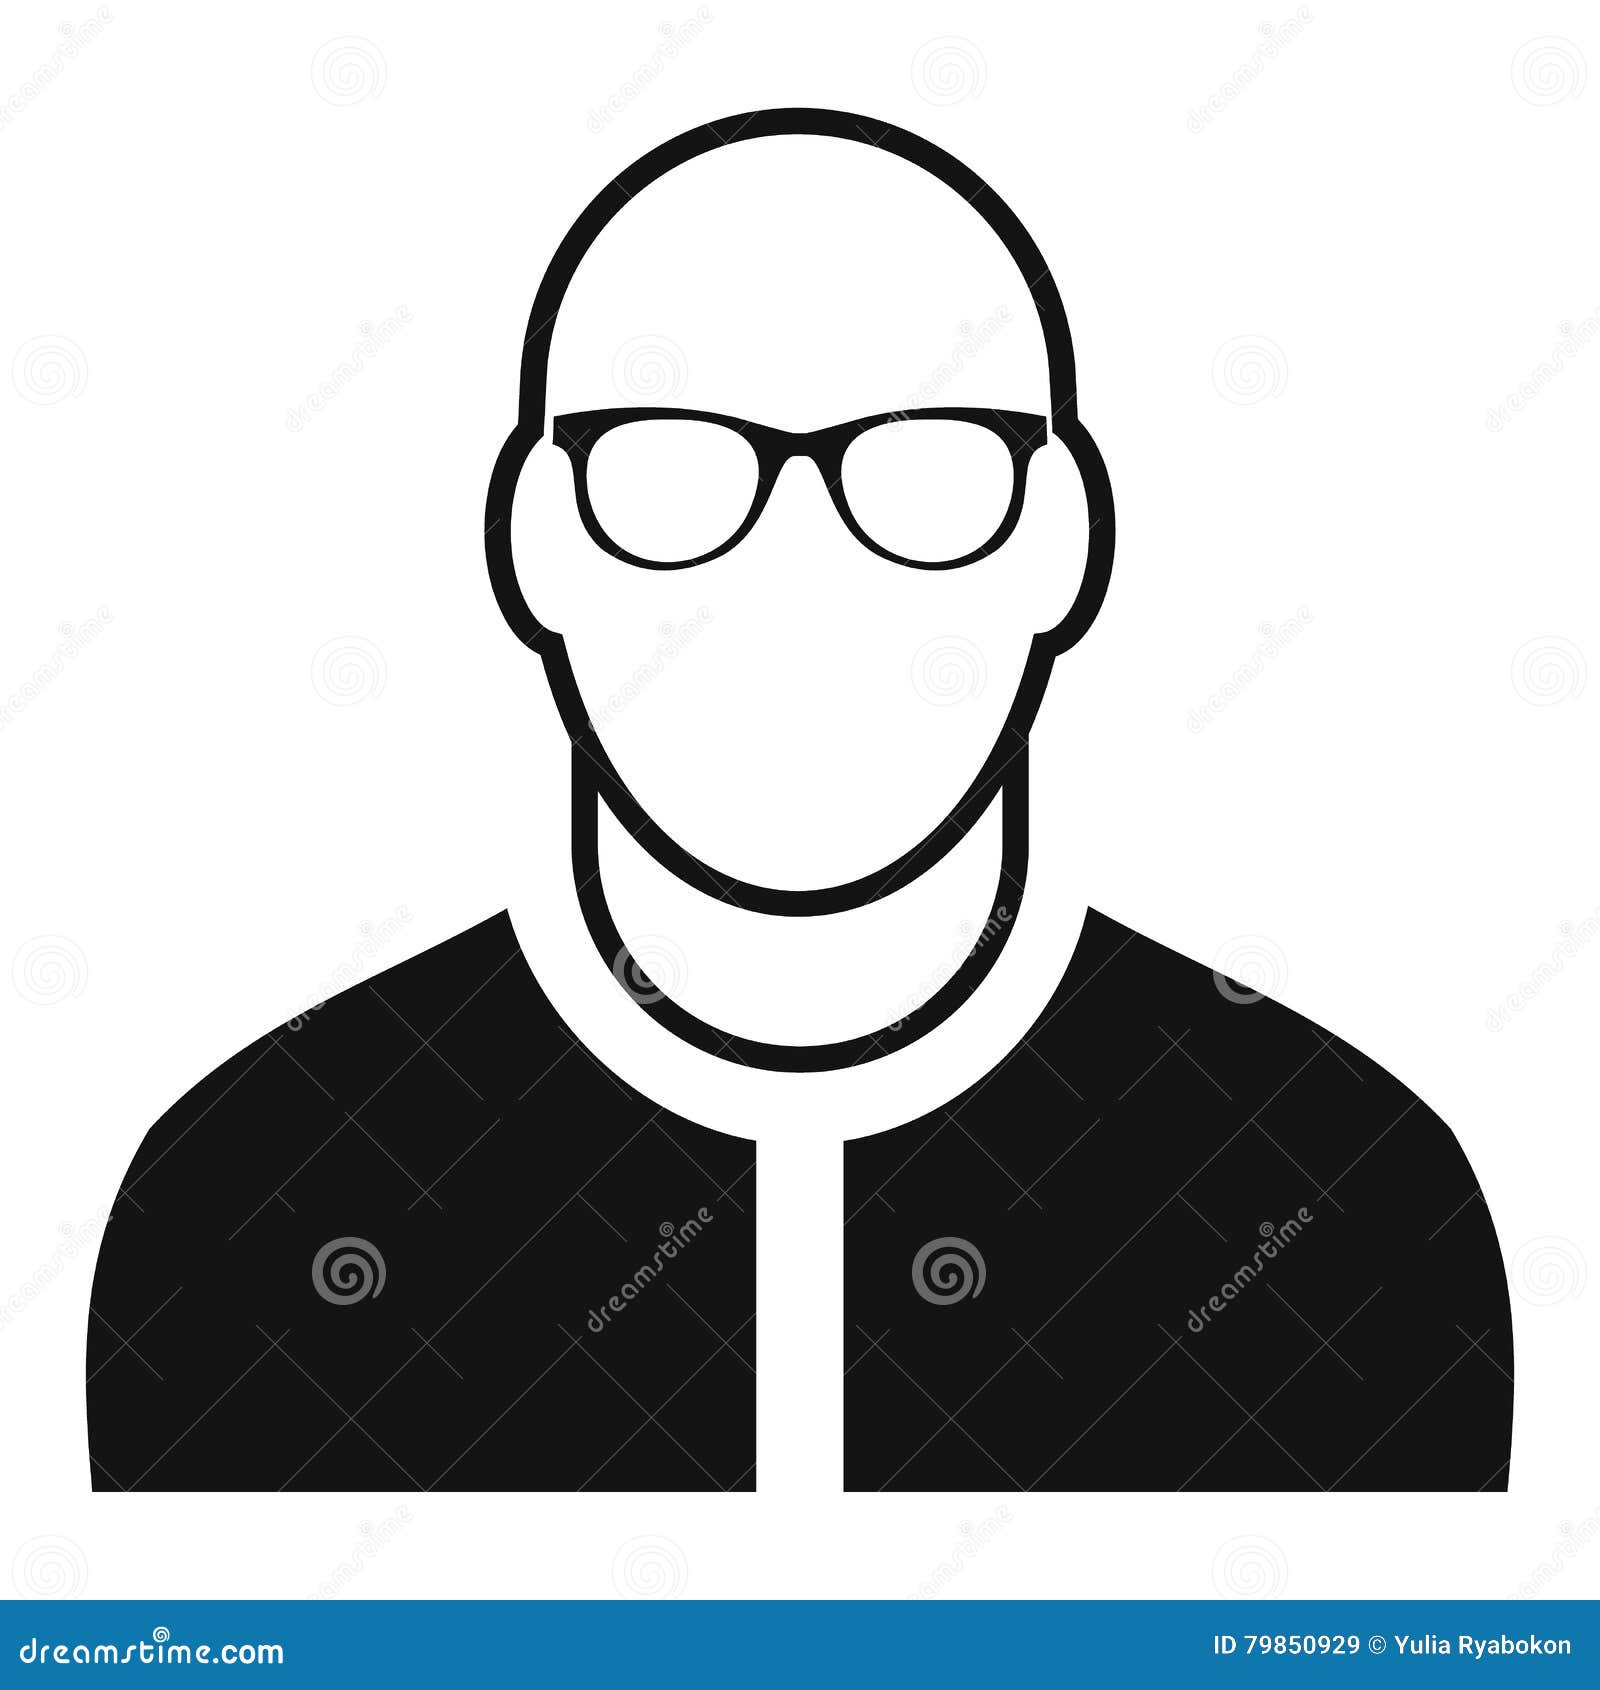 Bald Man Avatar Simple Icon Stock Vector  Illustration of office people  79850929